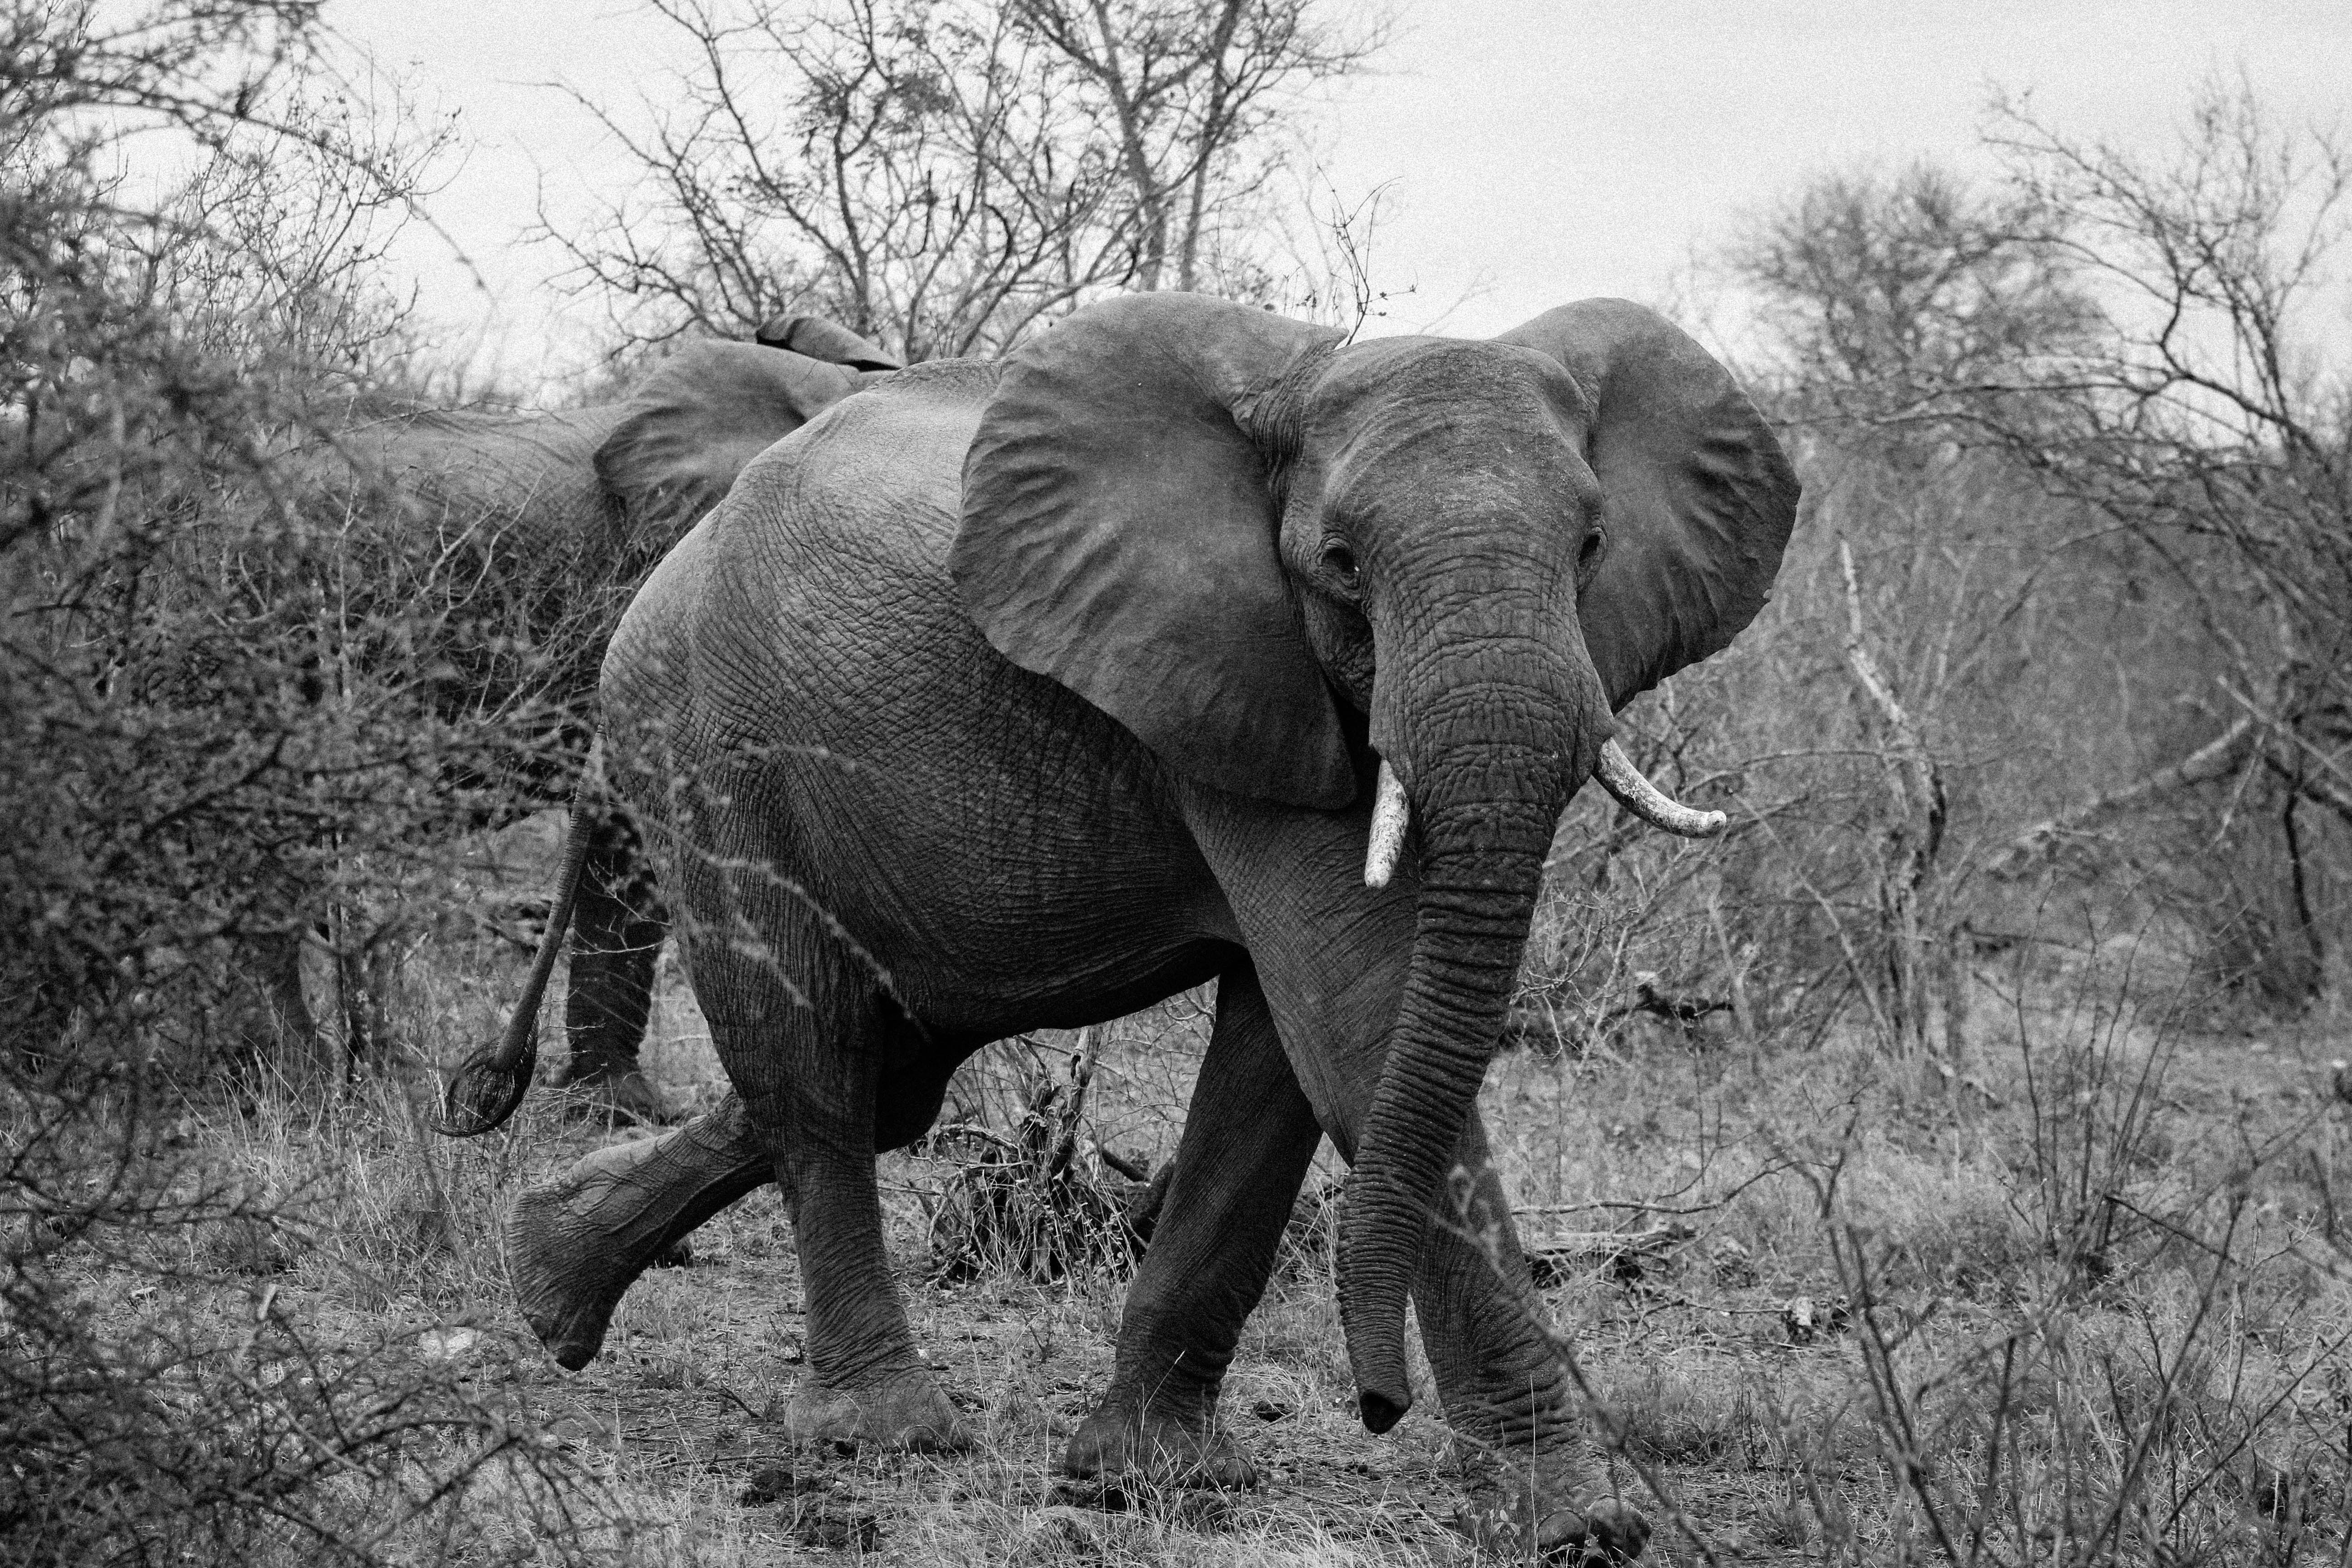 grayscale photograhy of 2 elephants